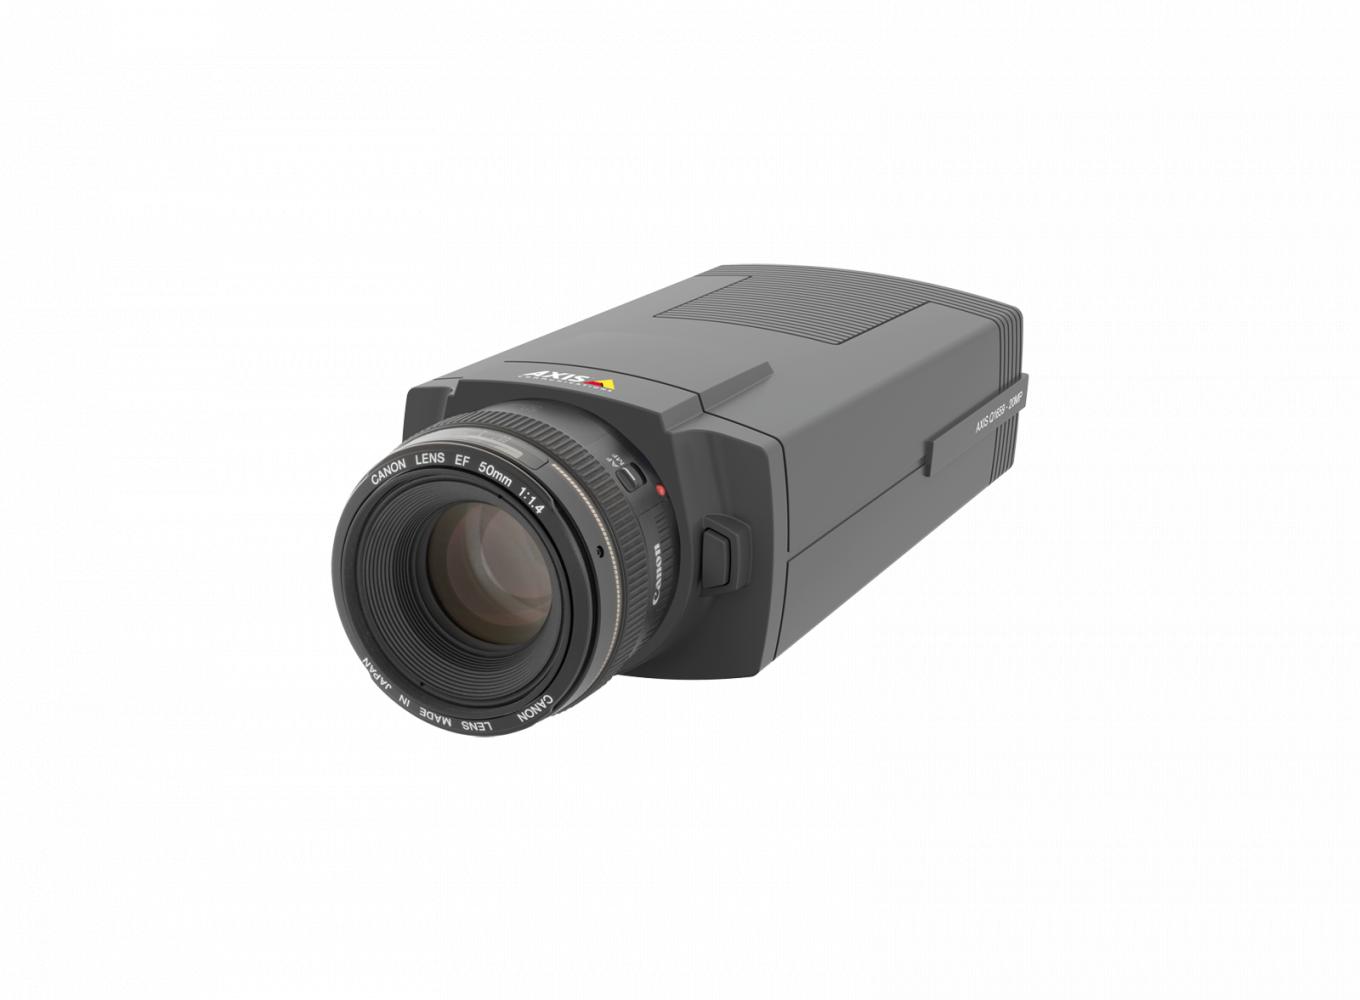 Caméra IP AXIS Q1659, 50 mm, vue de son angle gauche.